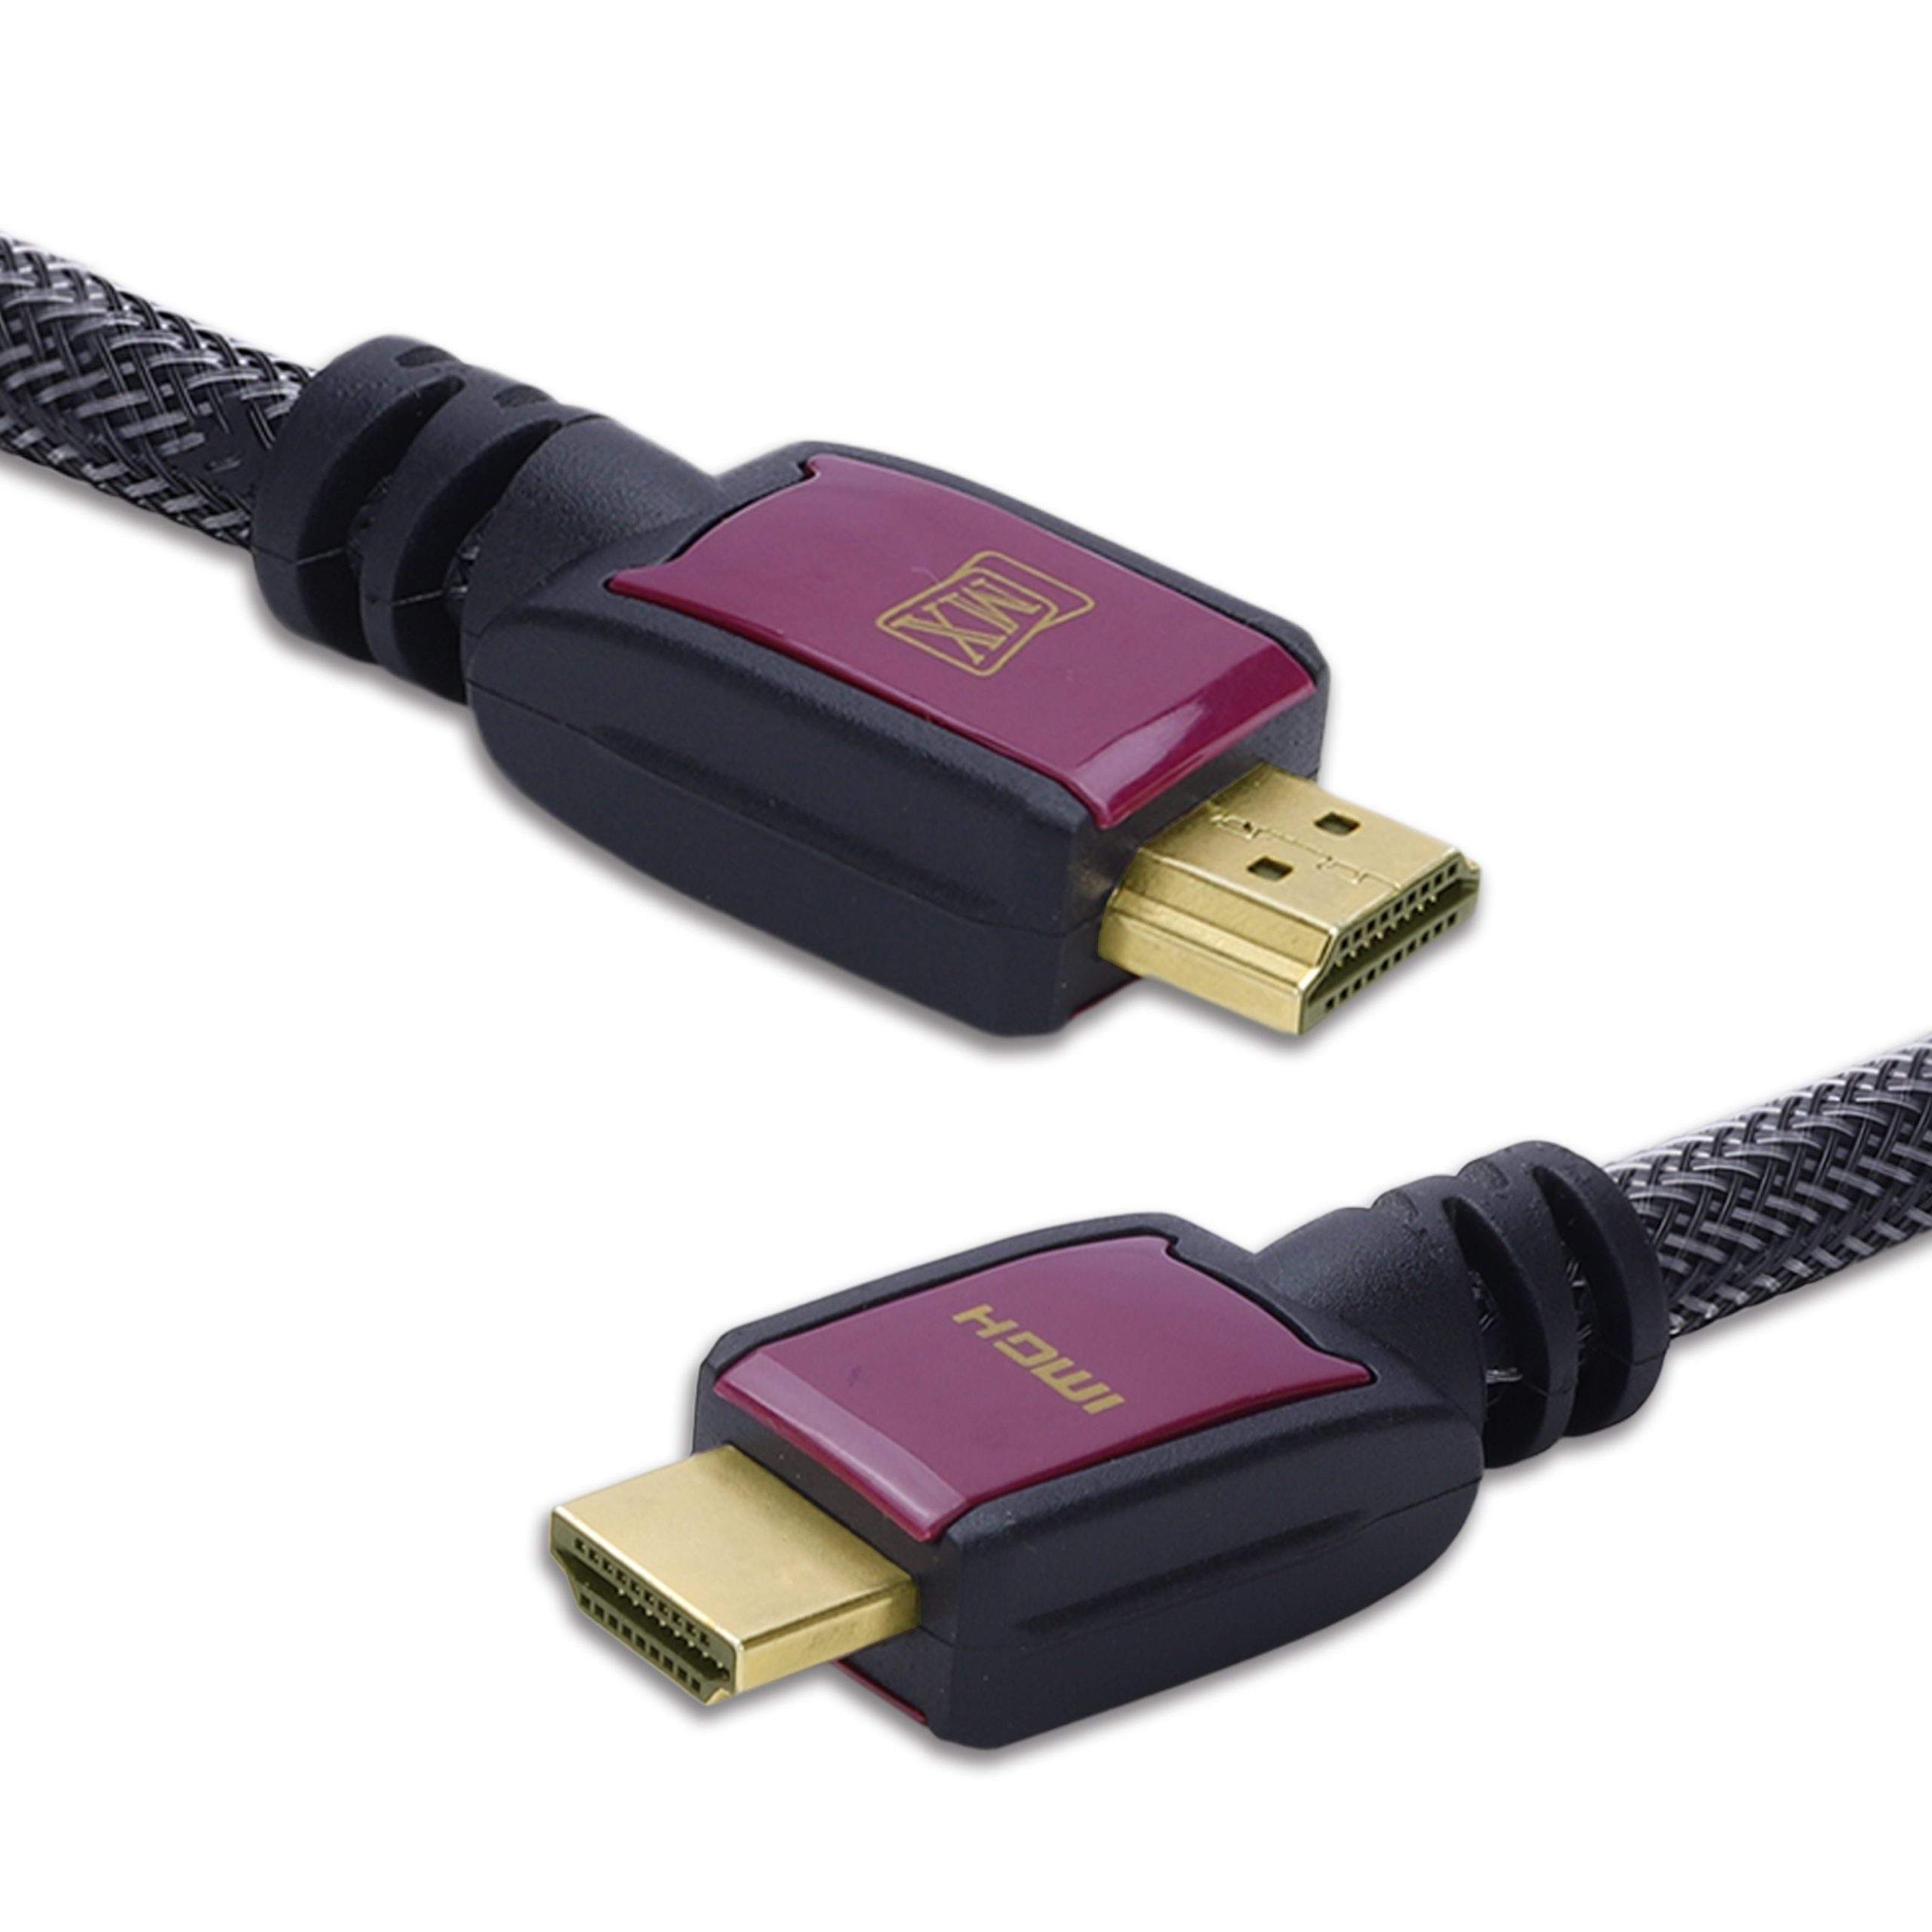 Cable HDMI - HDMI, 20m, 1.4 ver., Nylon, gold plated